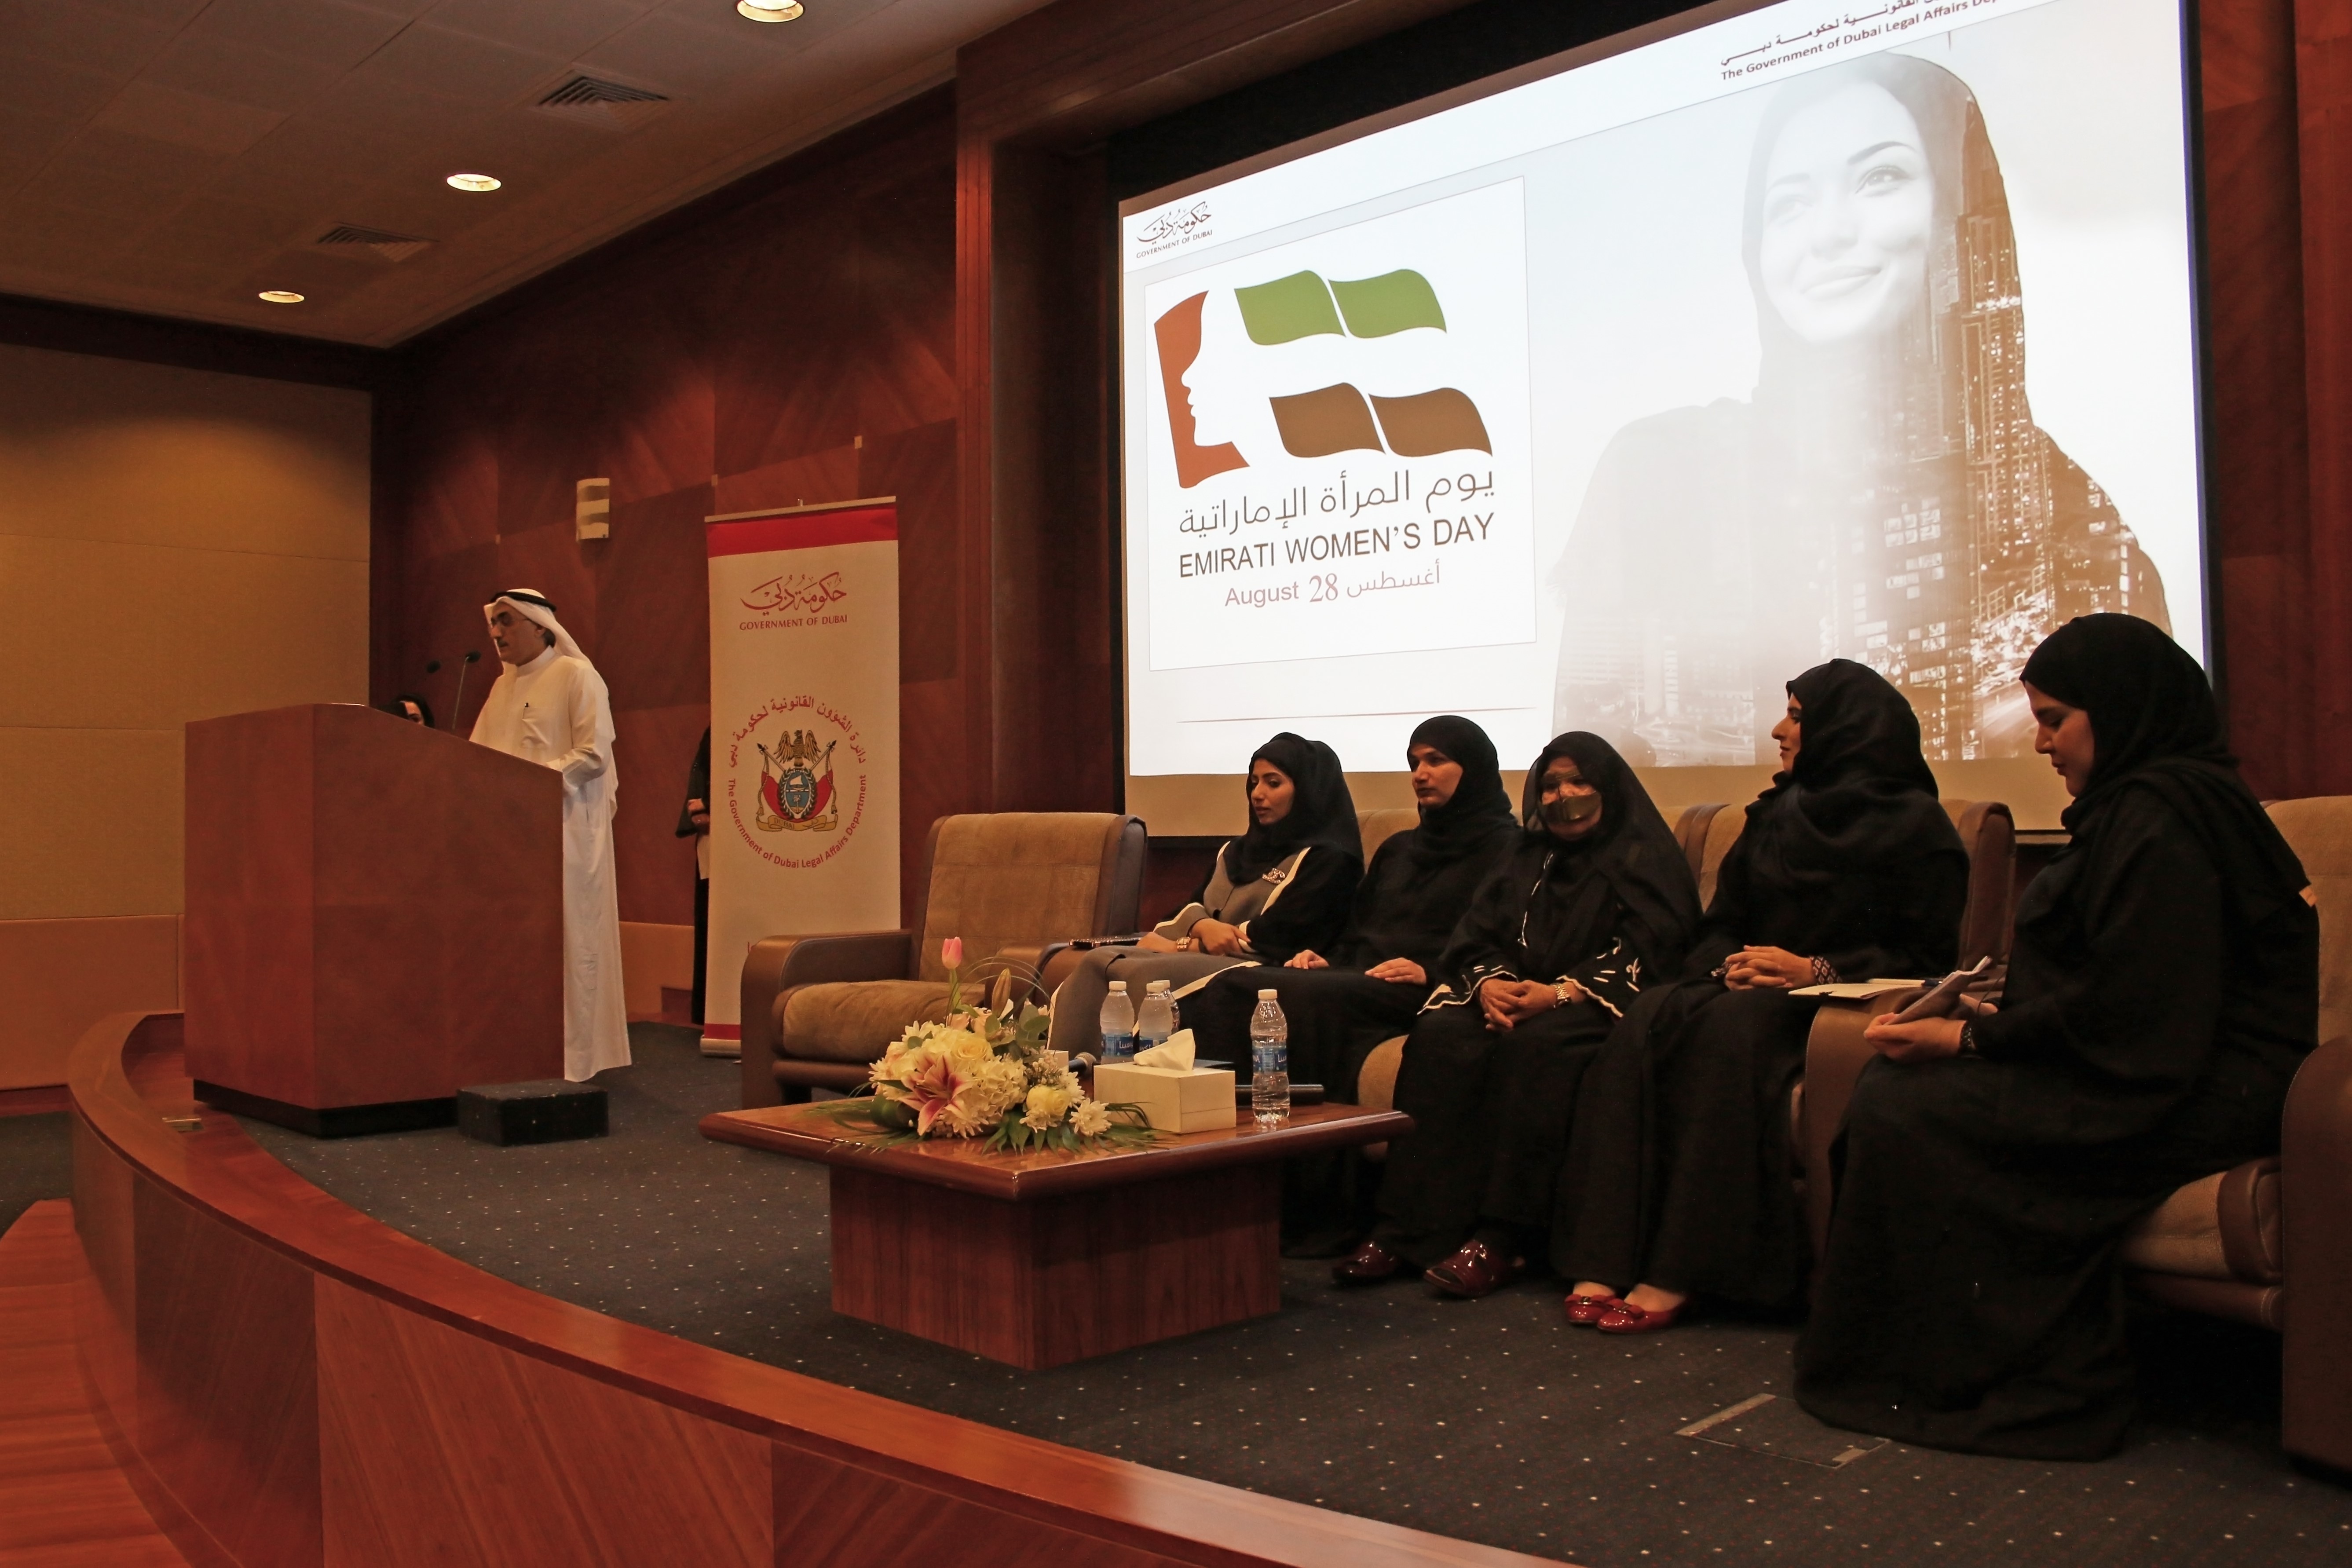 LAD Celebrates “Emirati Women